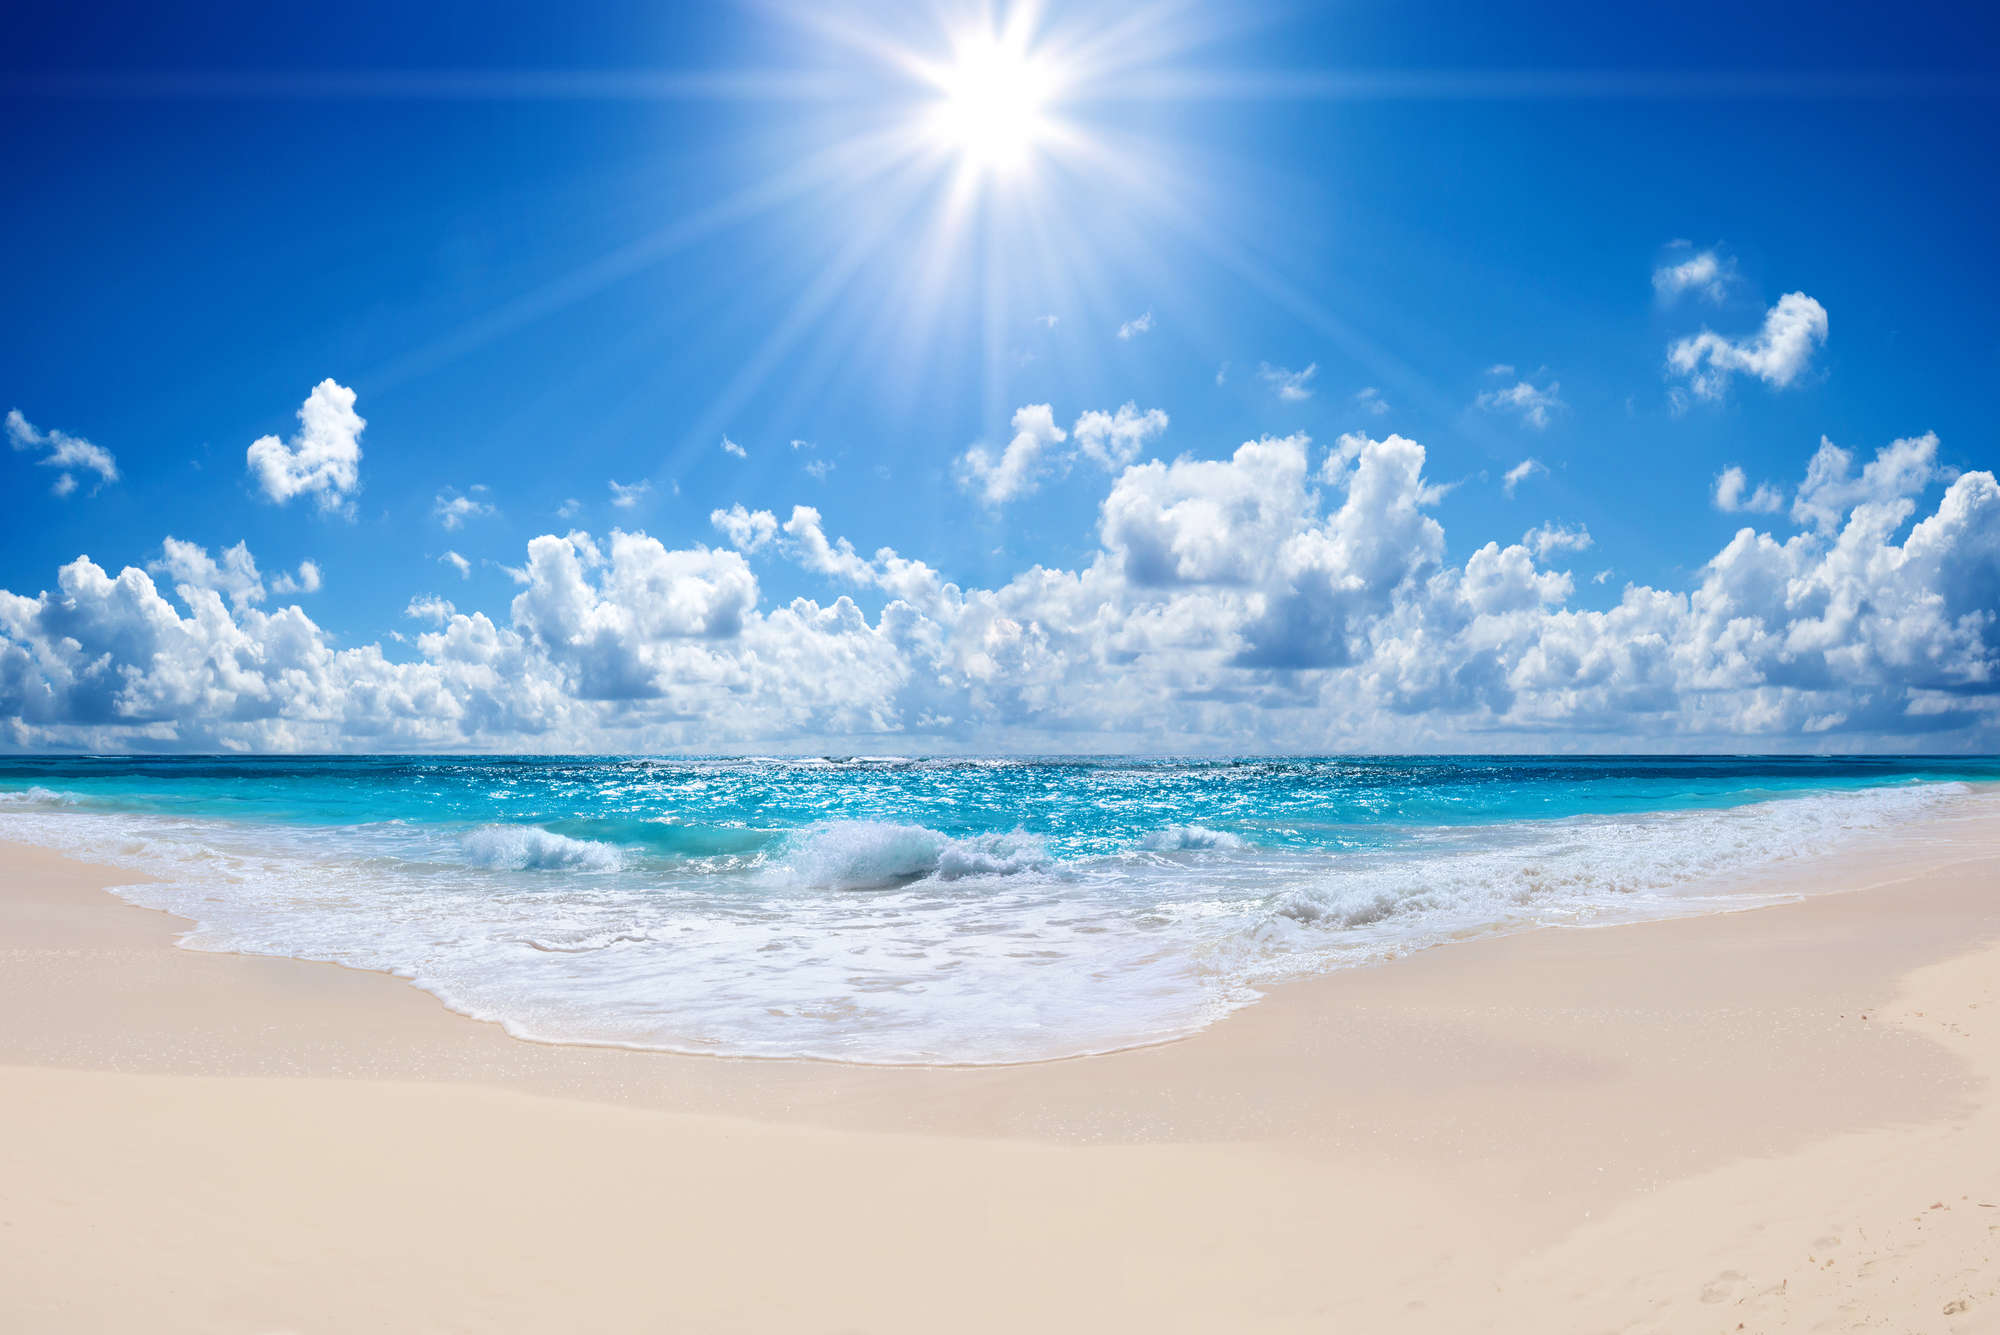             Strand Fototapete Wellengang mit strahlender Sonne auf Perlmutt Glattvlies
        